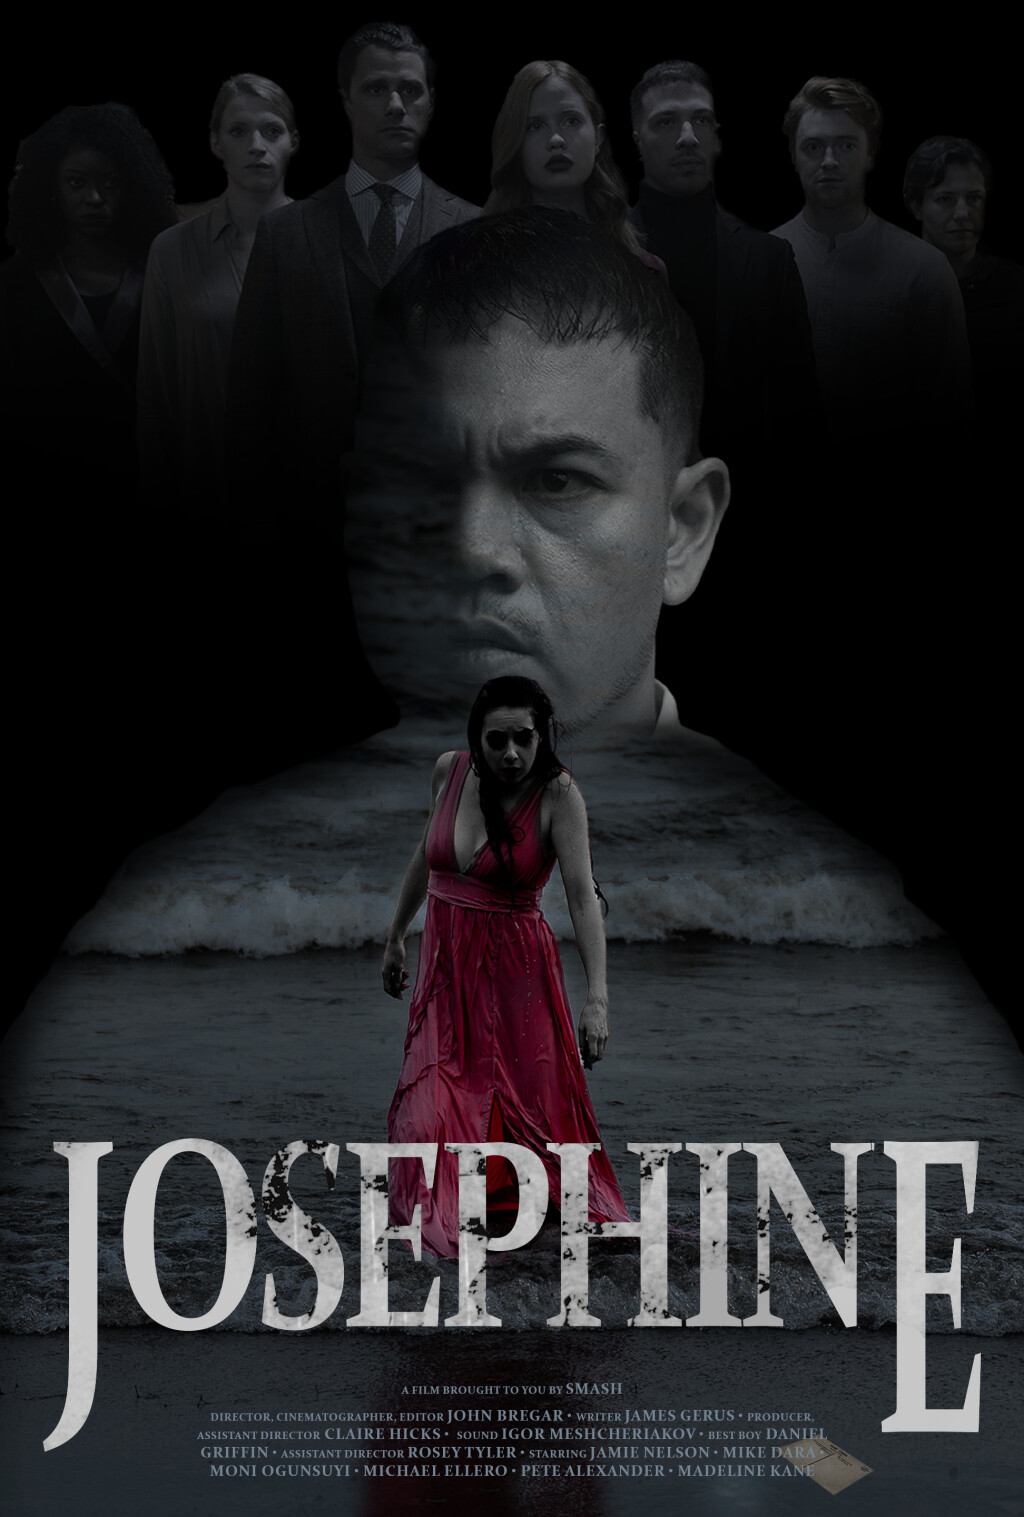 Filmposter for Josephine